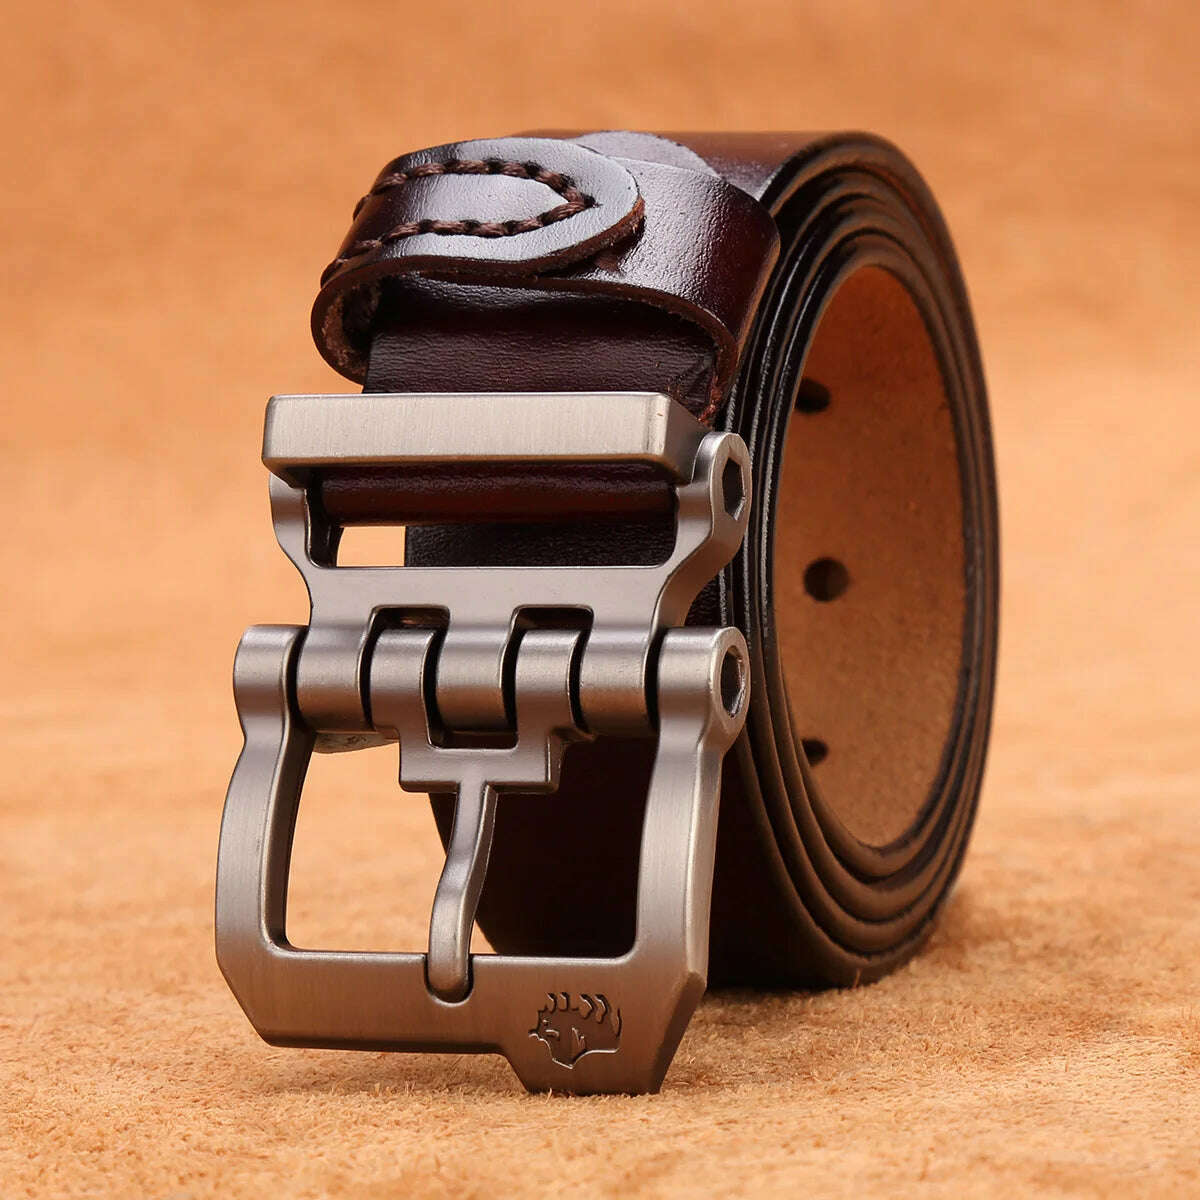 KIMLUD, BISON DENIM Men Belts Vintage Pin Buckle Belt Casual Genuine Leather High Quality Belts For Men Business Leather Strap for Jeans, Brown / 130cm / CN, KIMLUD Womens Clothes